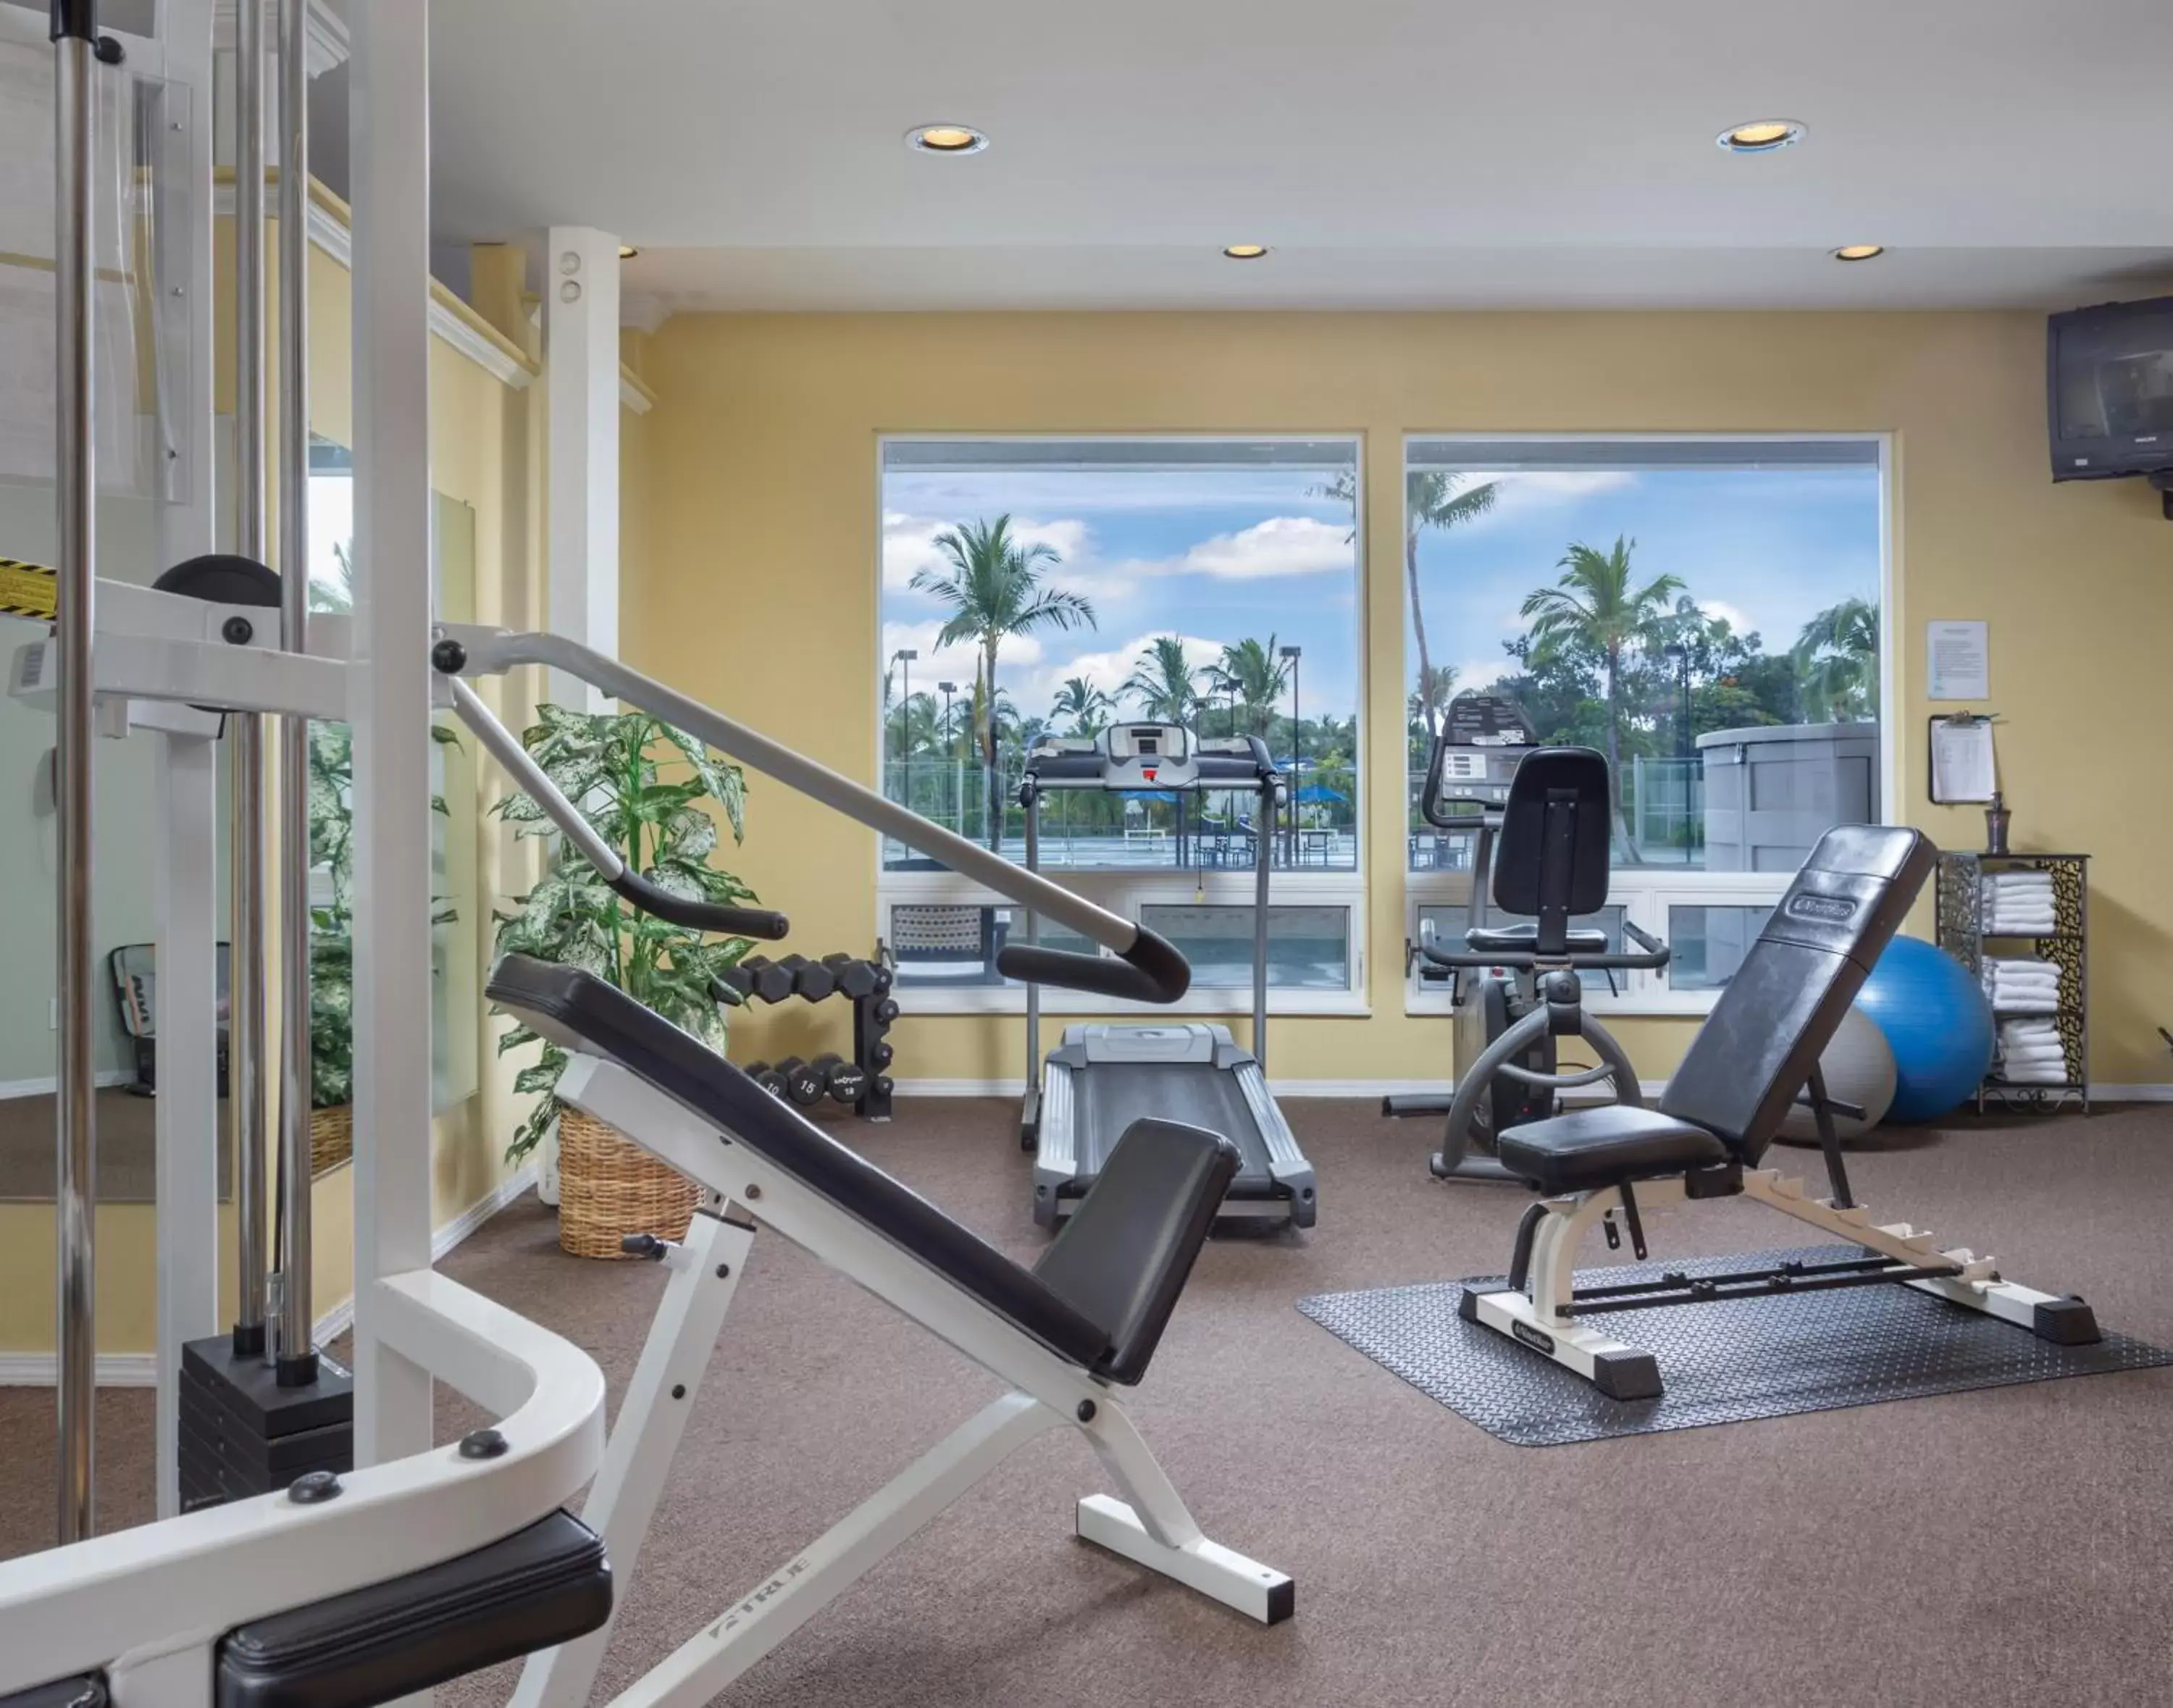 Fitness centre/facilities, Fitness Center/Facilities in Wyndham Mauna Loa Village